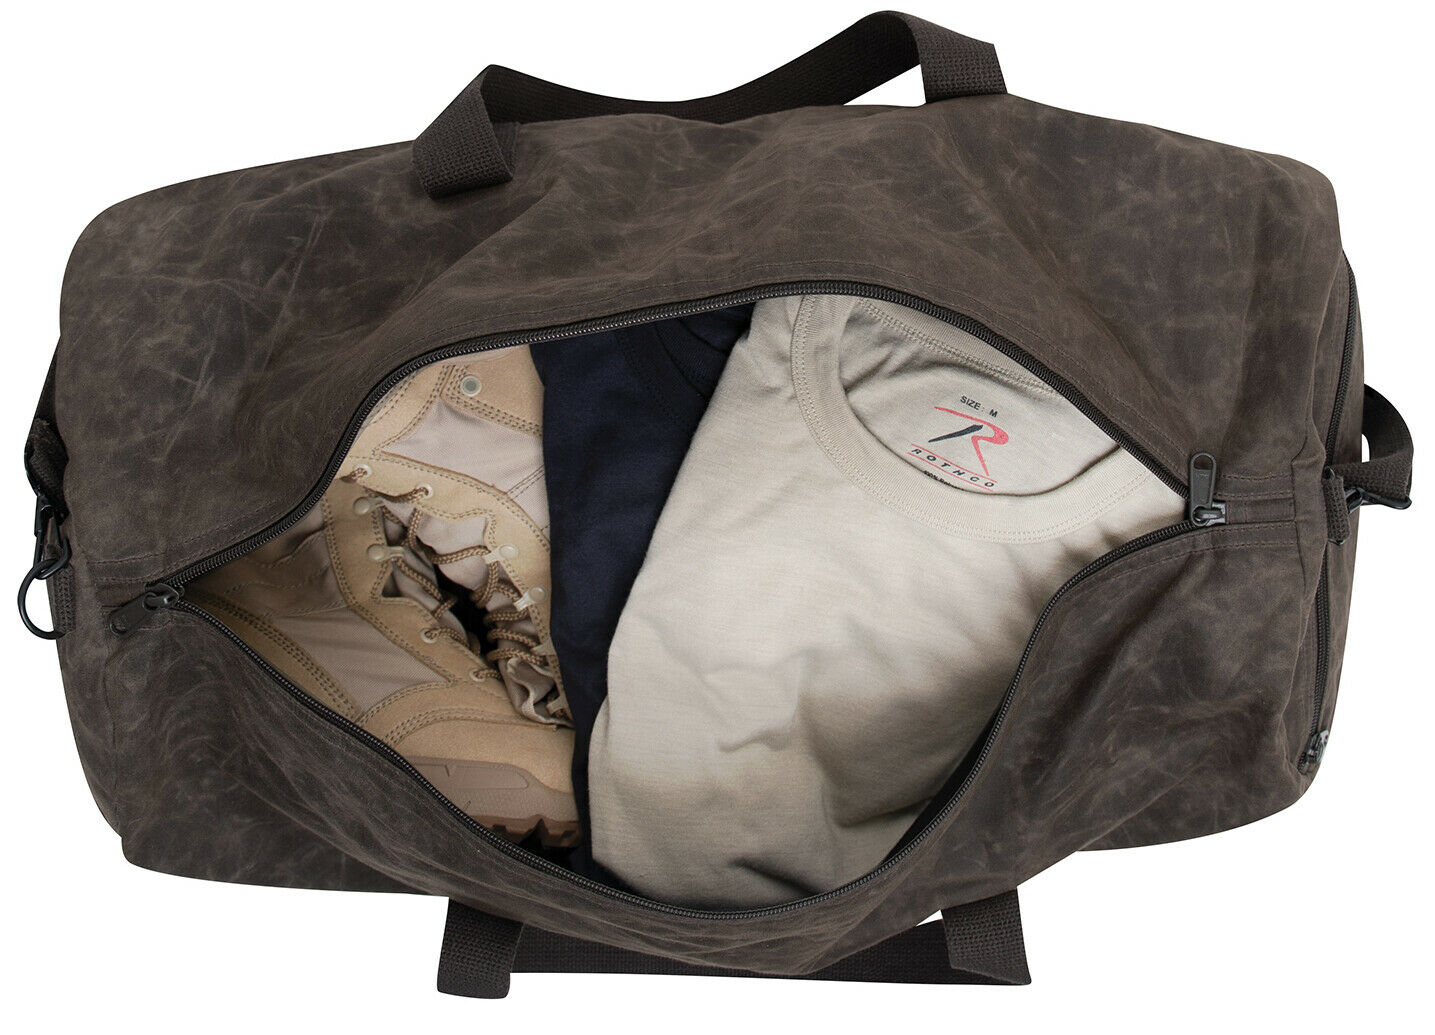 Rothco Waxed Canvas Shoulder Duffle Bag - 24 Inch Olive Drab